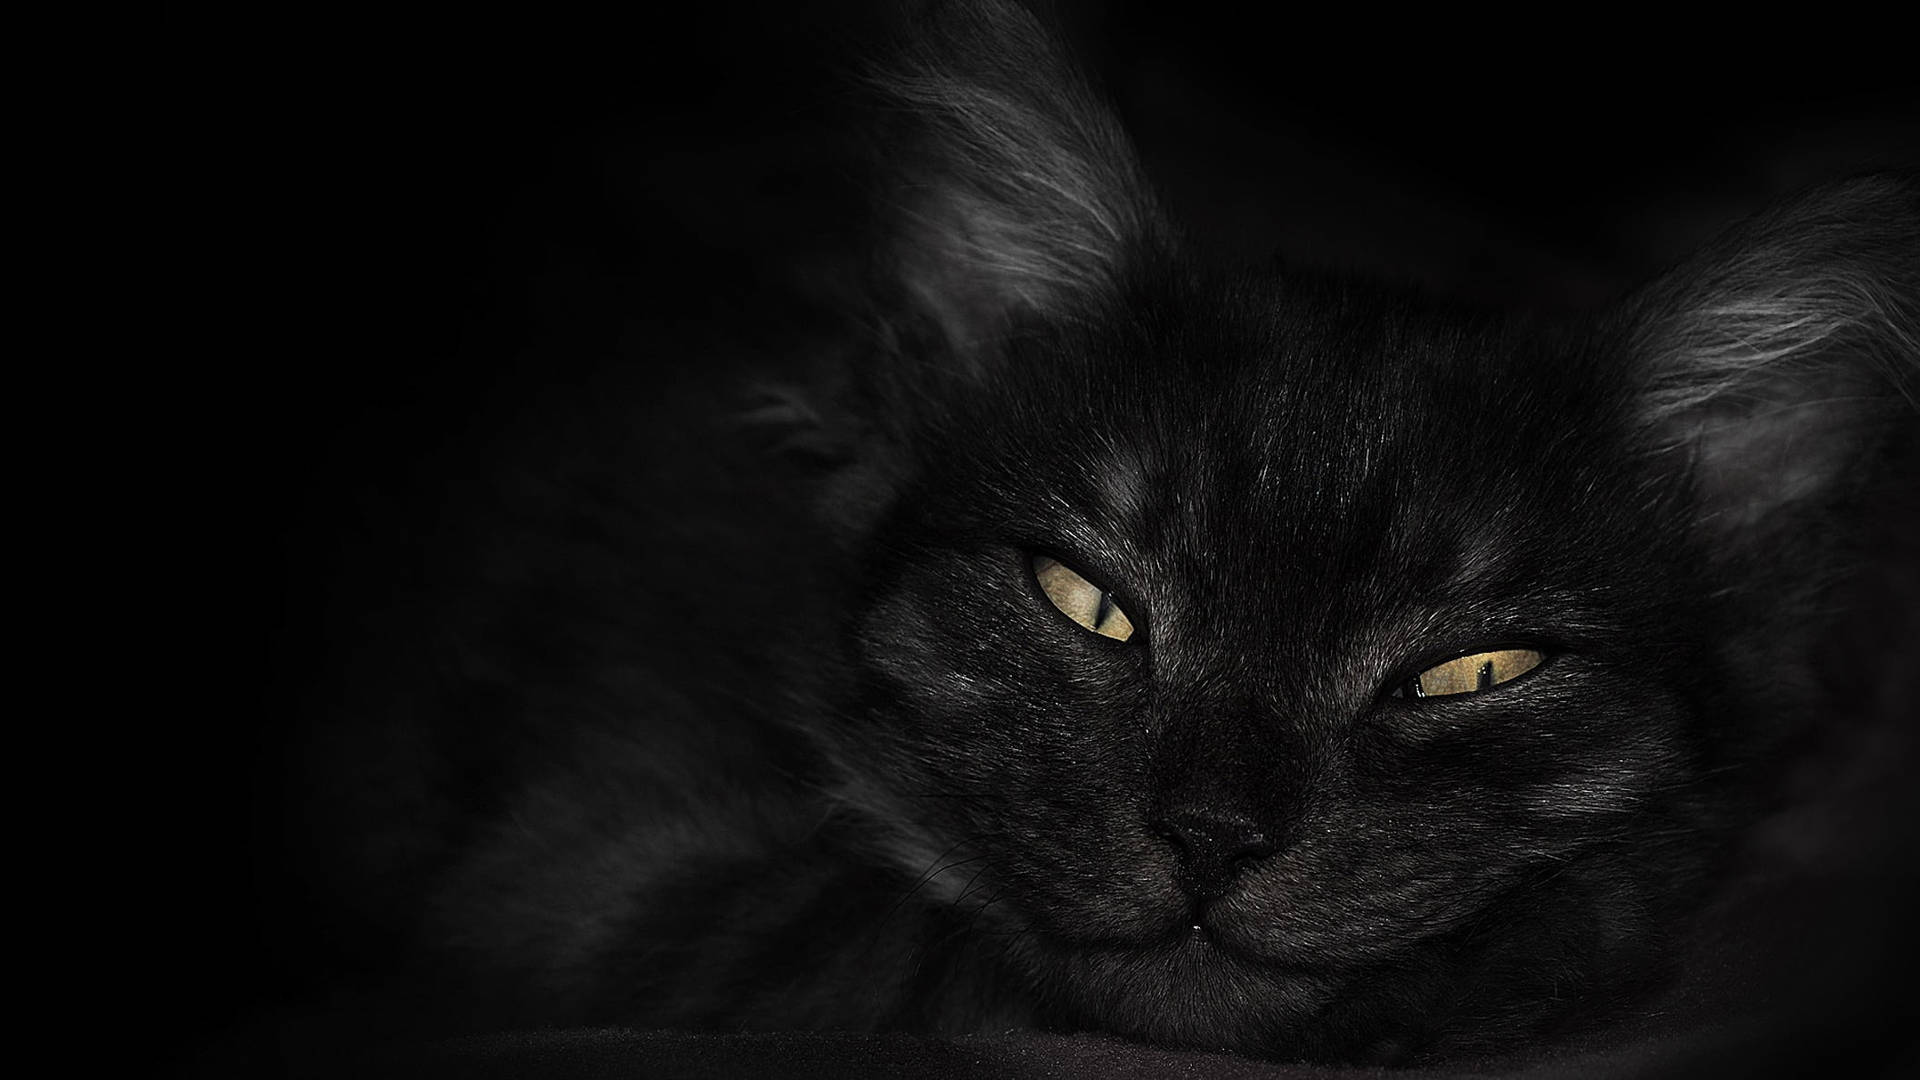 Dark Laptop Black Cat With Yellow Eyes Wallpaper